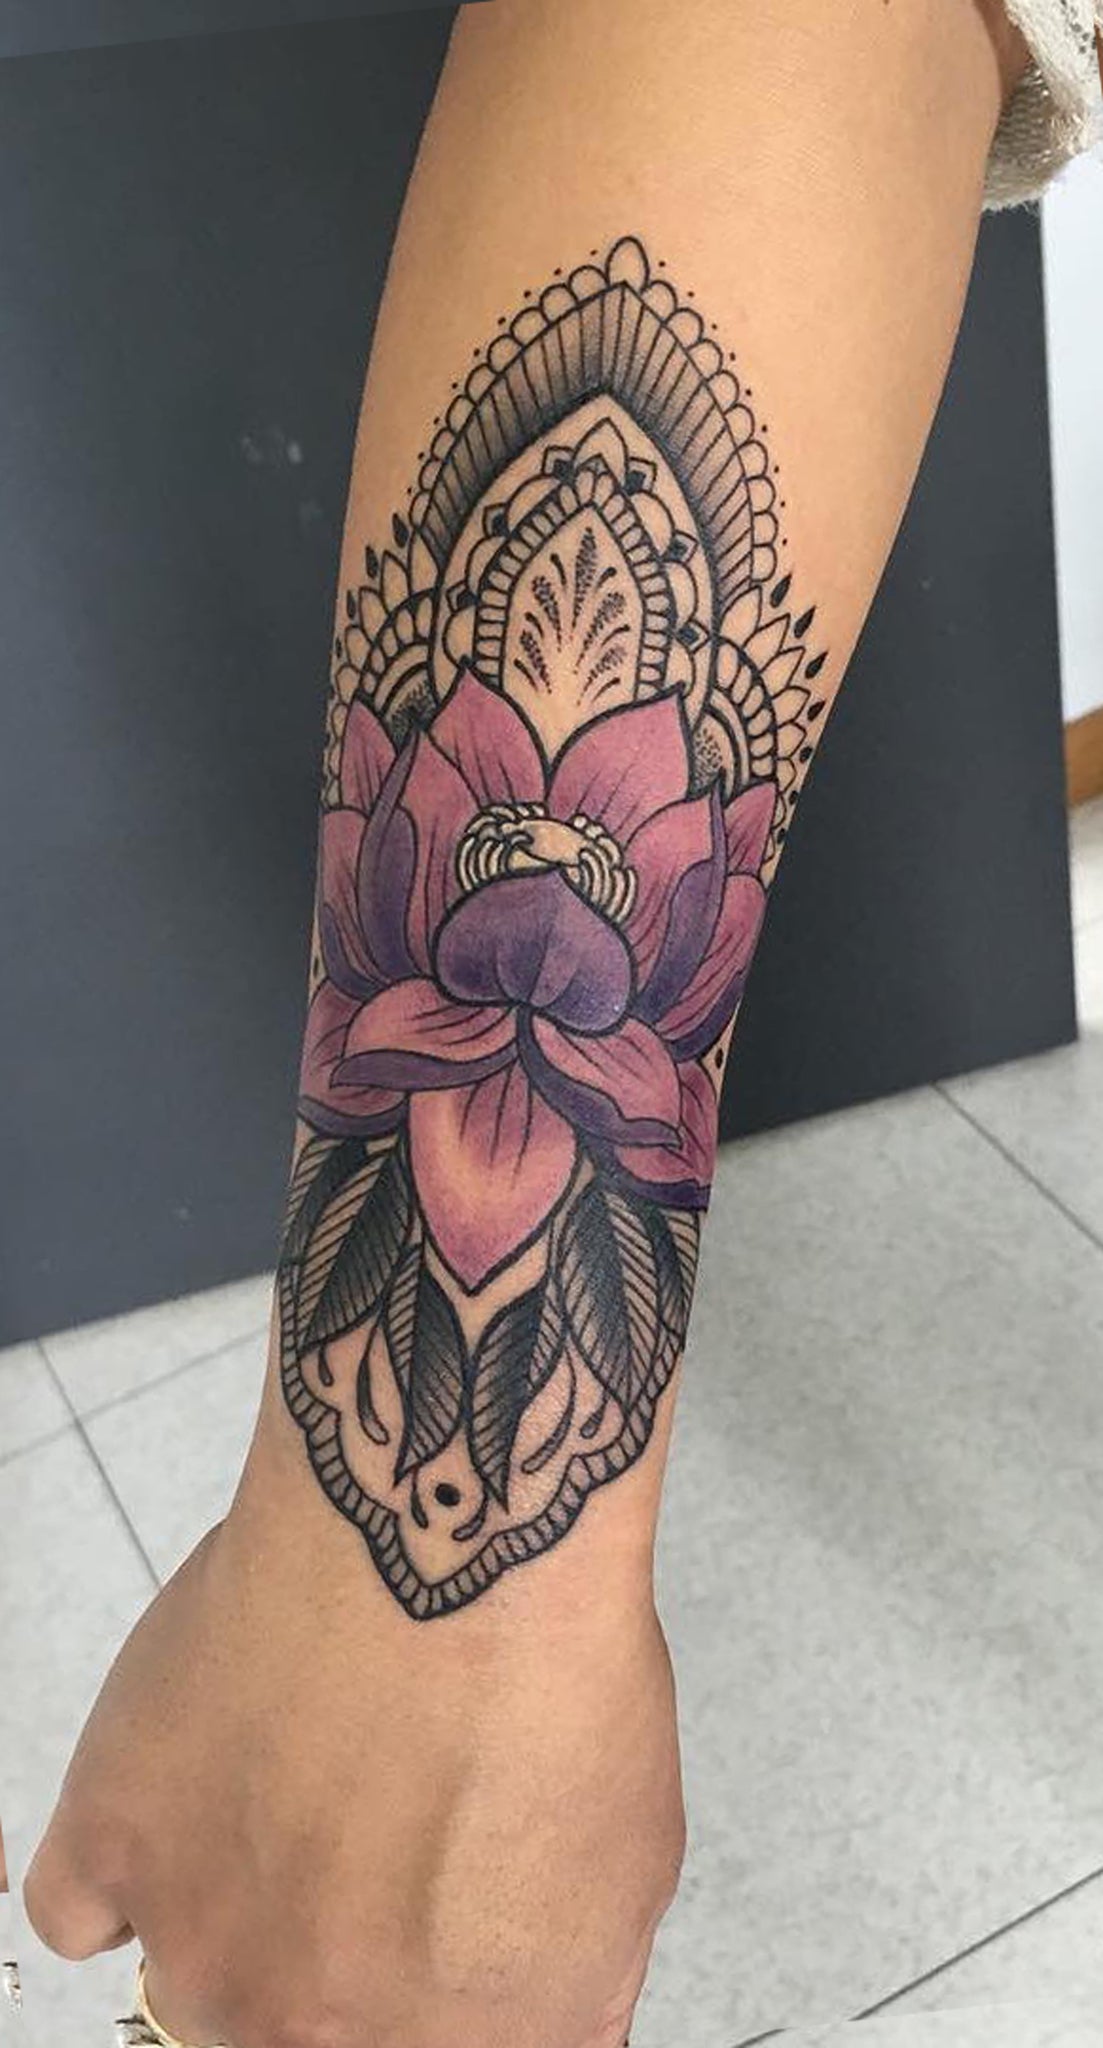 Geometric Tribal Flower Forearm Tattoo Ideas for Women - Bohemian Lotus Arm Sleeve Tat -  ideas del tatuaje del antebrazo de la flor del lirio para las mujeres - www.MyBodiArt.com 